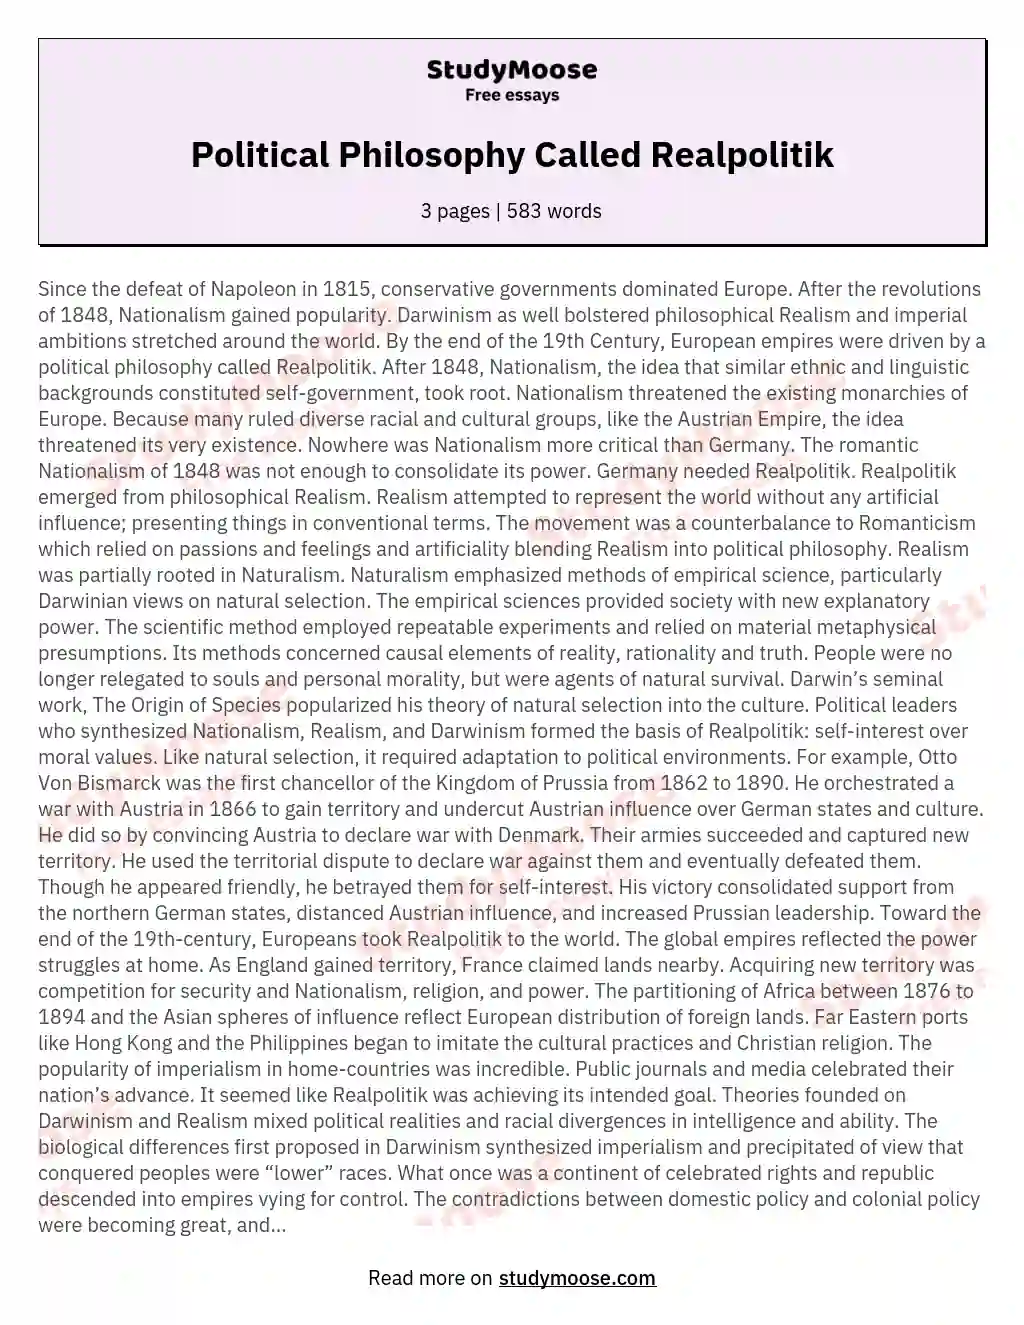 Political Philosophy Called Realpolitik essay